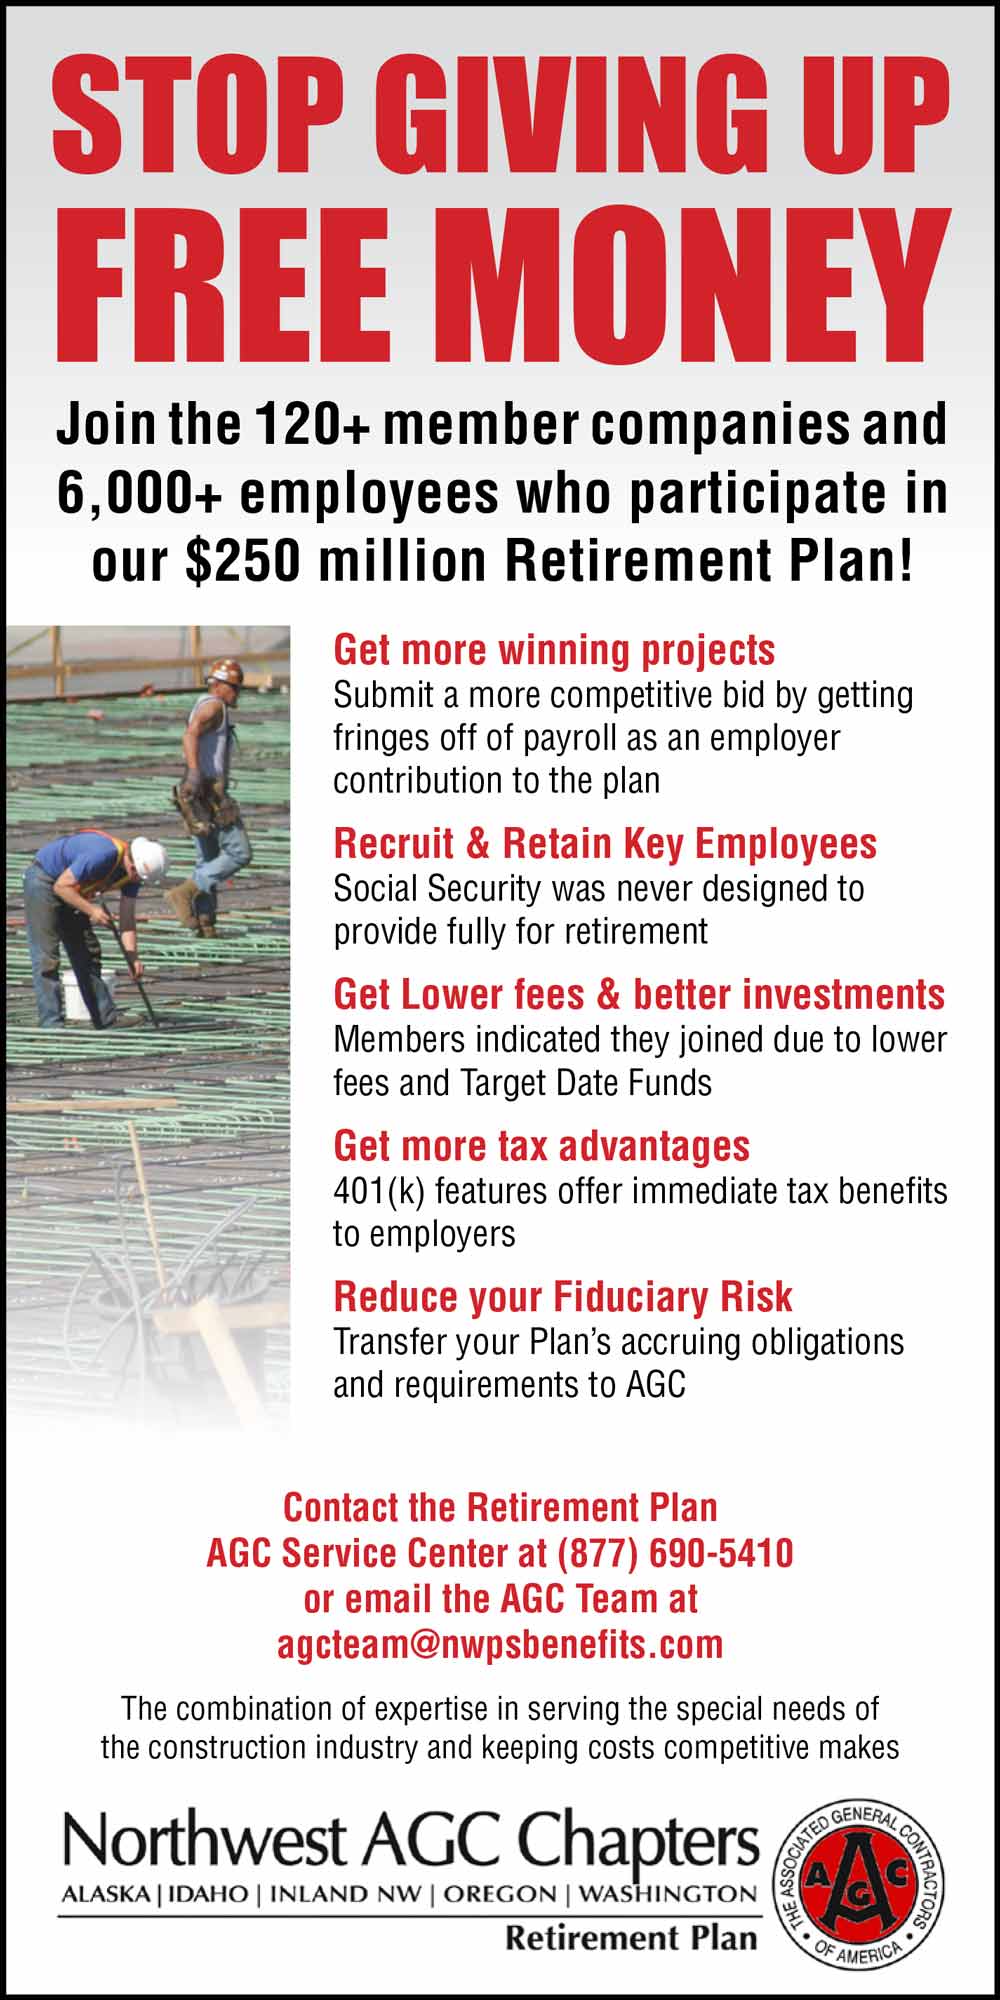 Northwest AGC Chapters Retirement Plan Advertisement